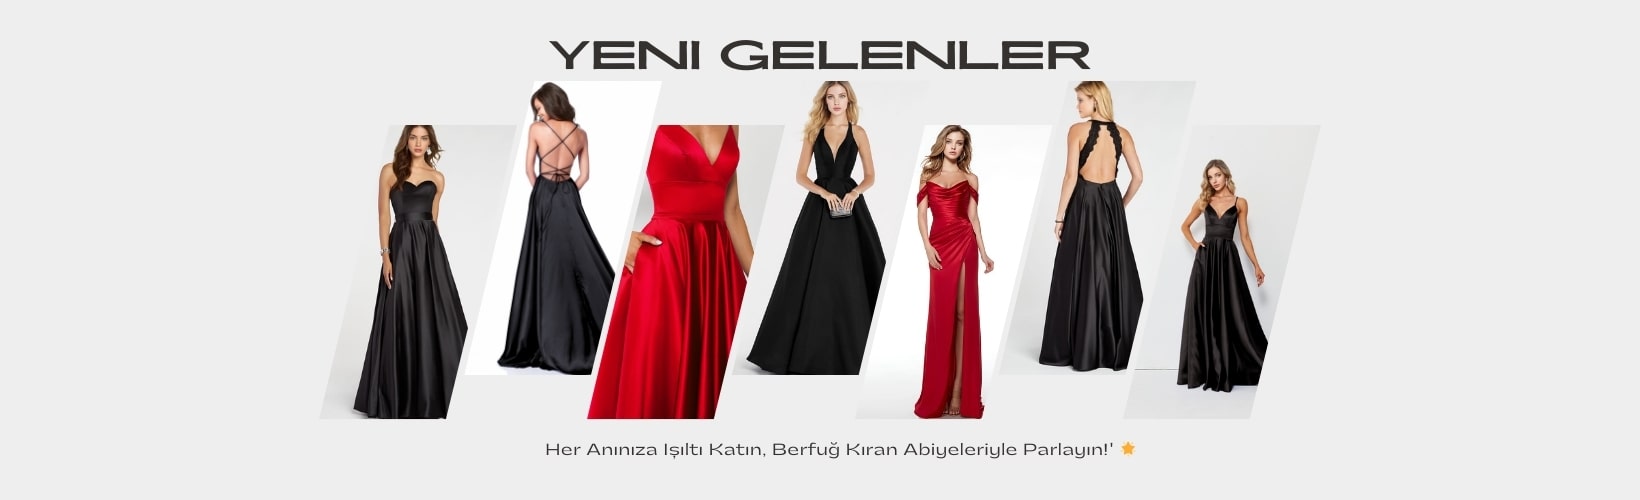 Modern Fashion & Clothing Online Shop Showroom Facebook Cover (1640 x 500 piksel)-min.jpg (58 KB)